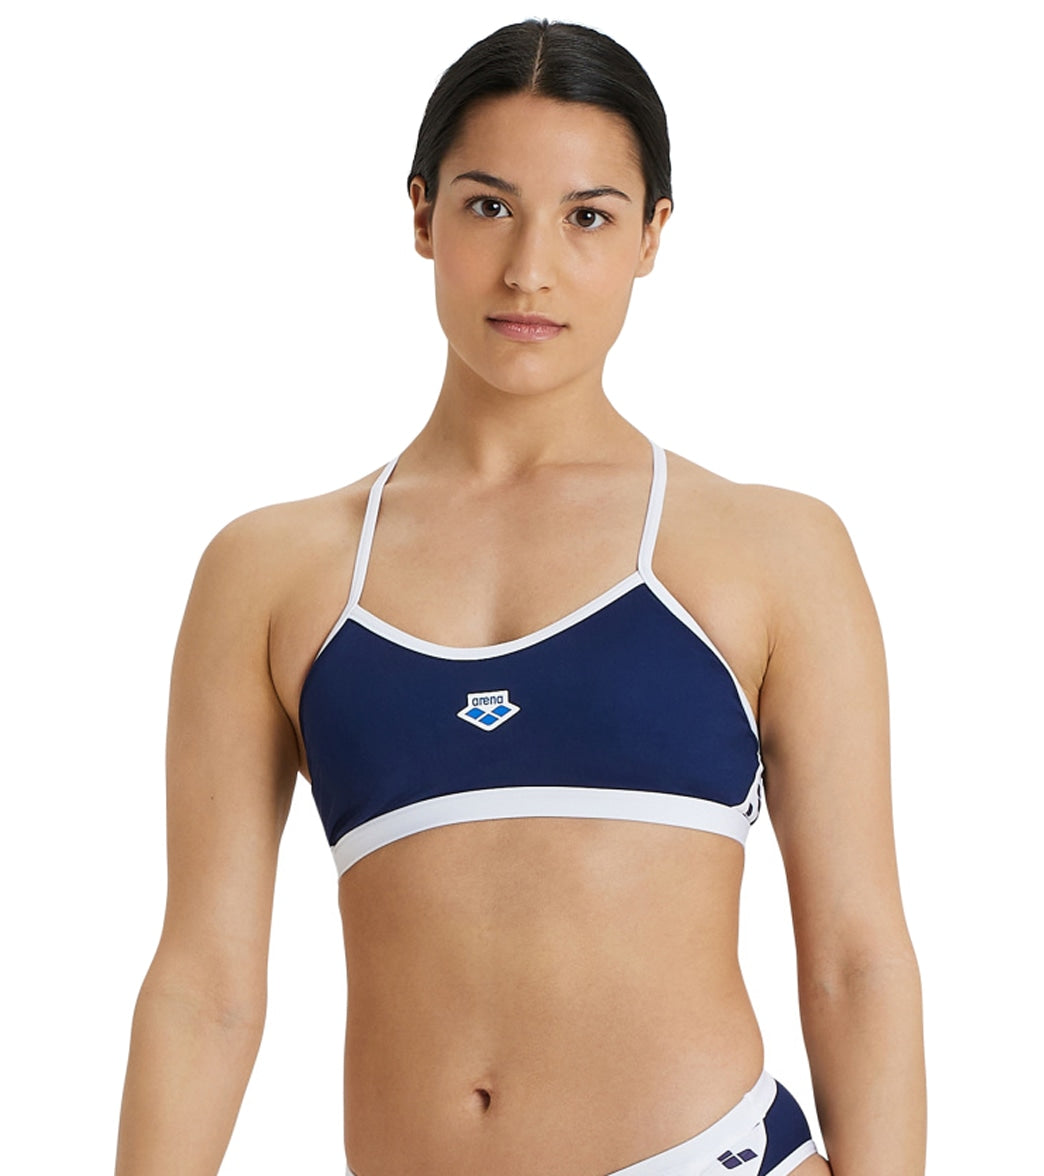 Arena Women's Icons Solid Cross Back Bikini Top at SwimOutlet.com